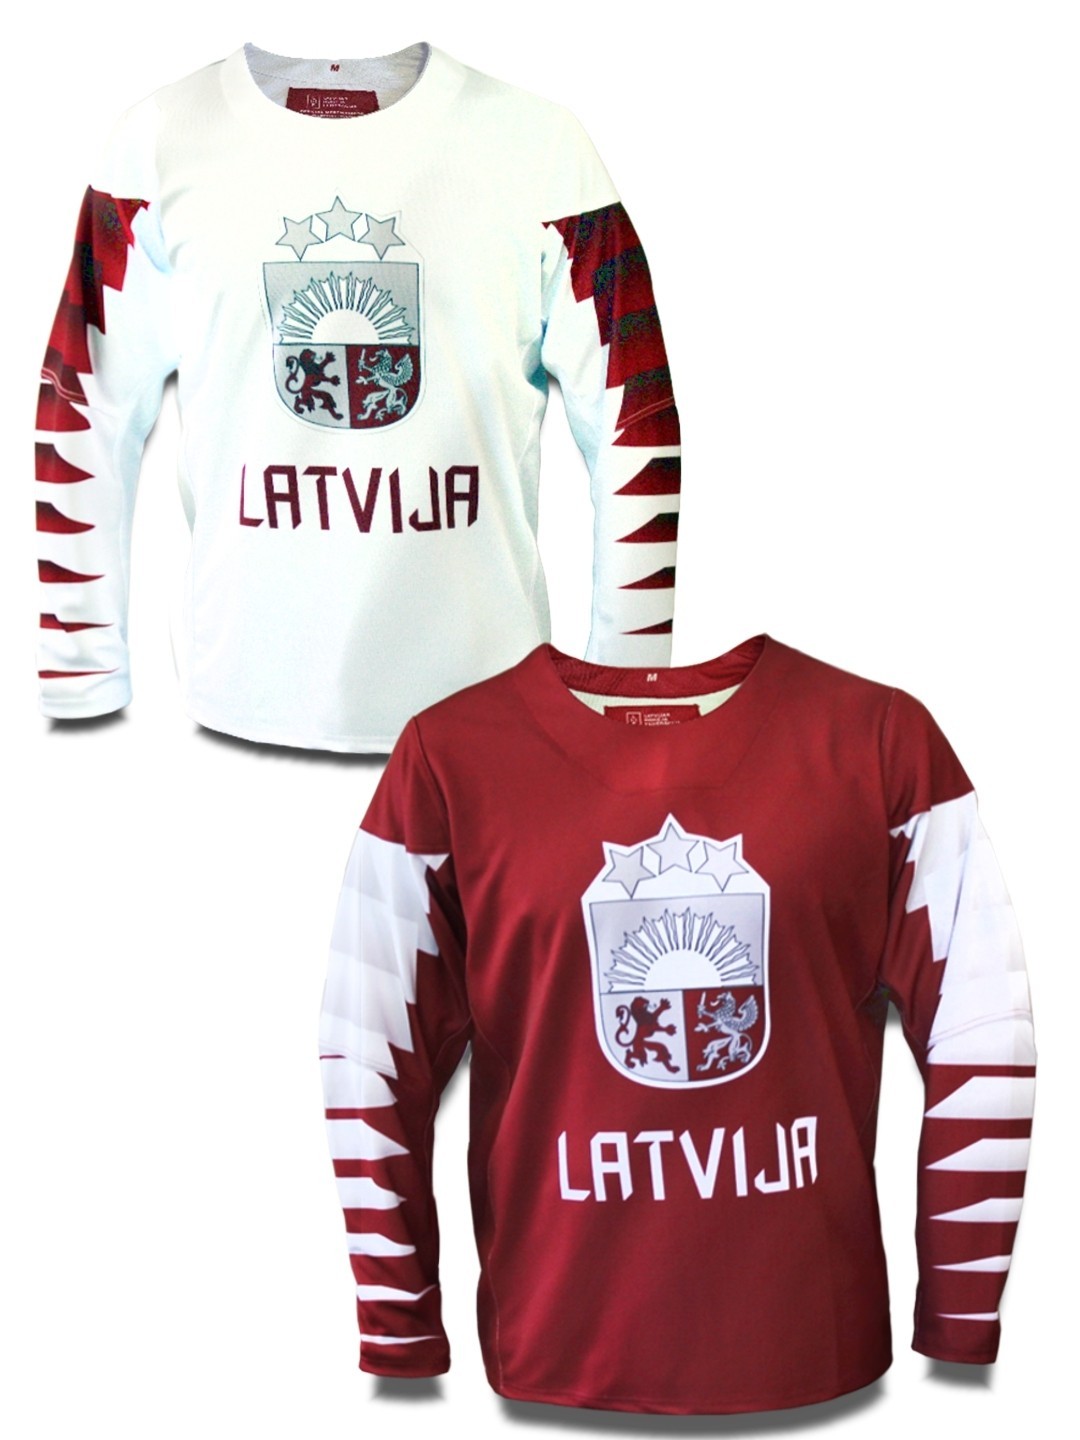 Team Latvia Senior Fan Jersey